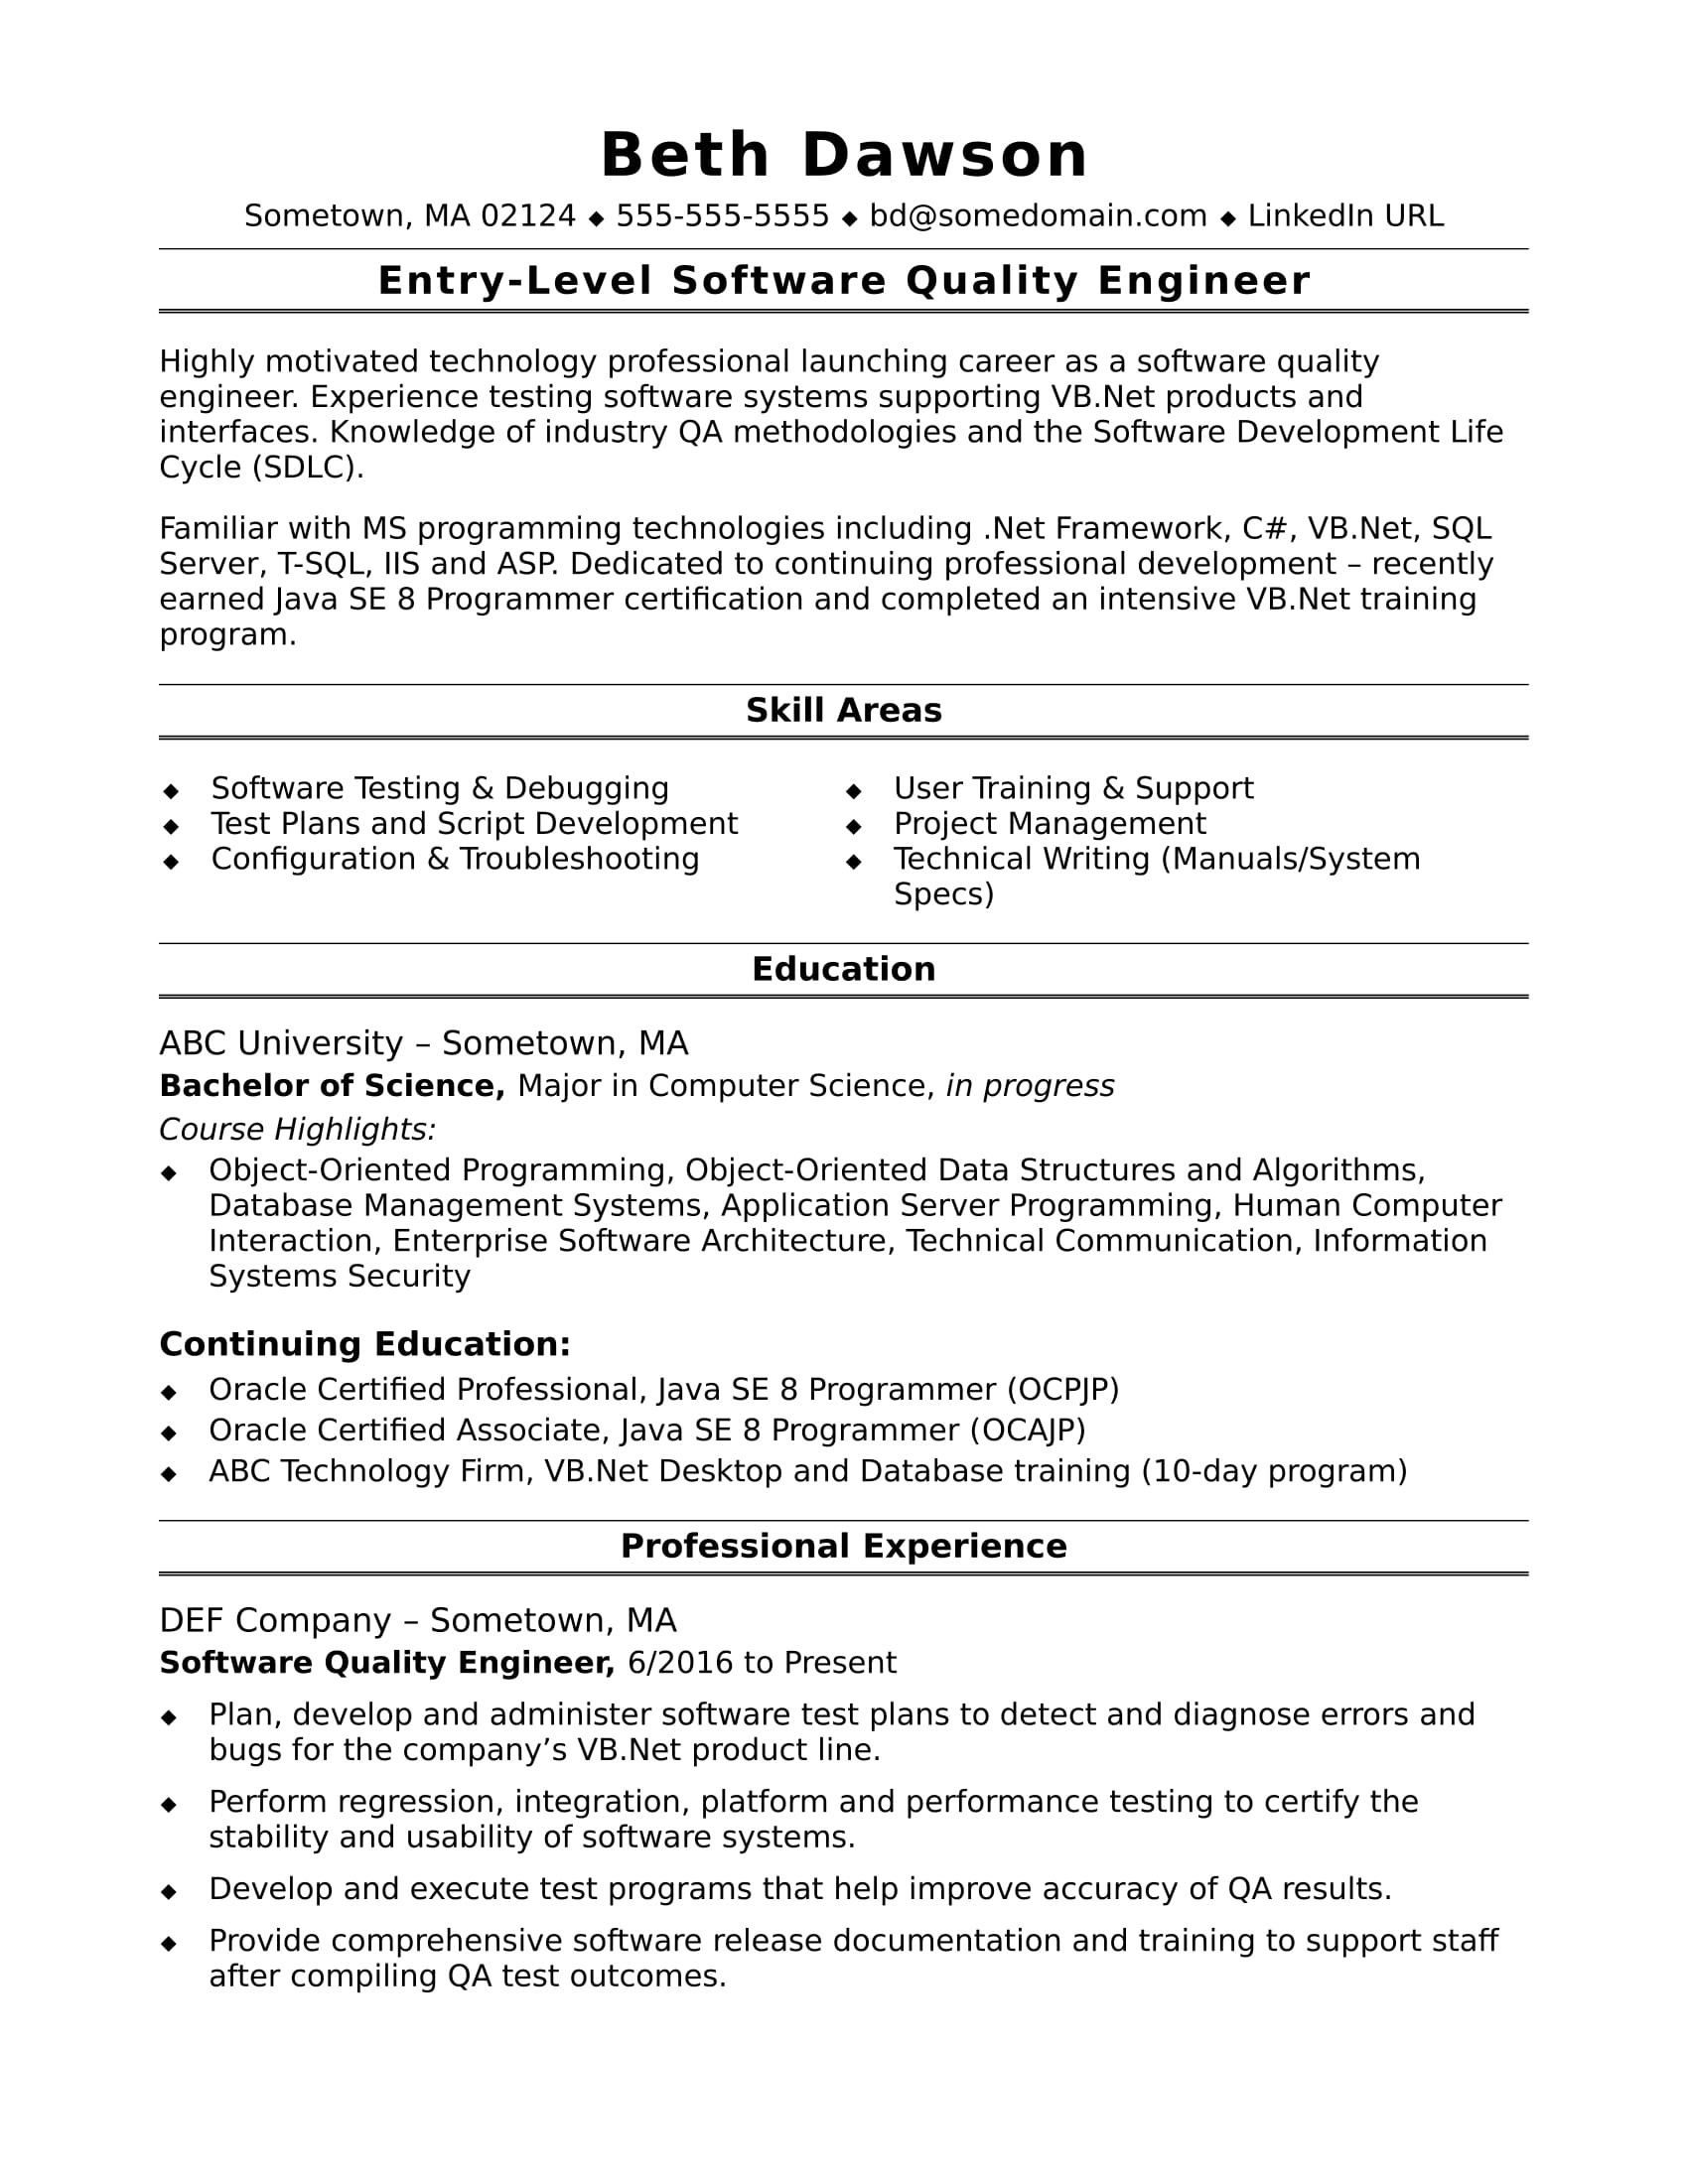 Mechanical Quality assurance Engineer Resume Sample Entry-level Qa Engineer Resume Monster.com